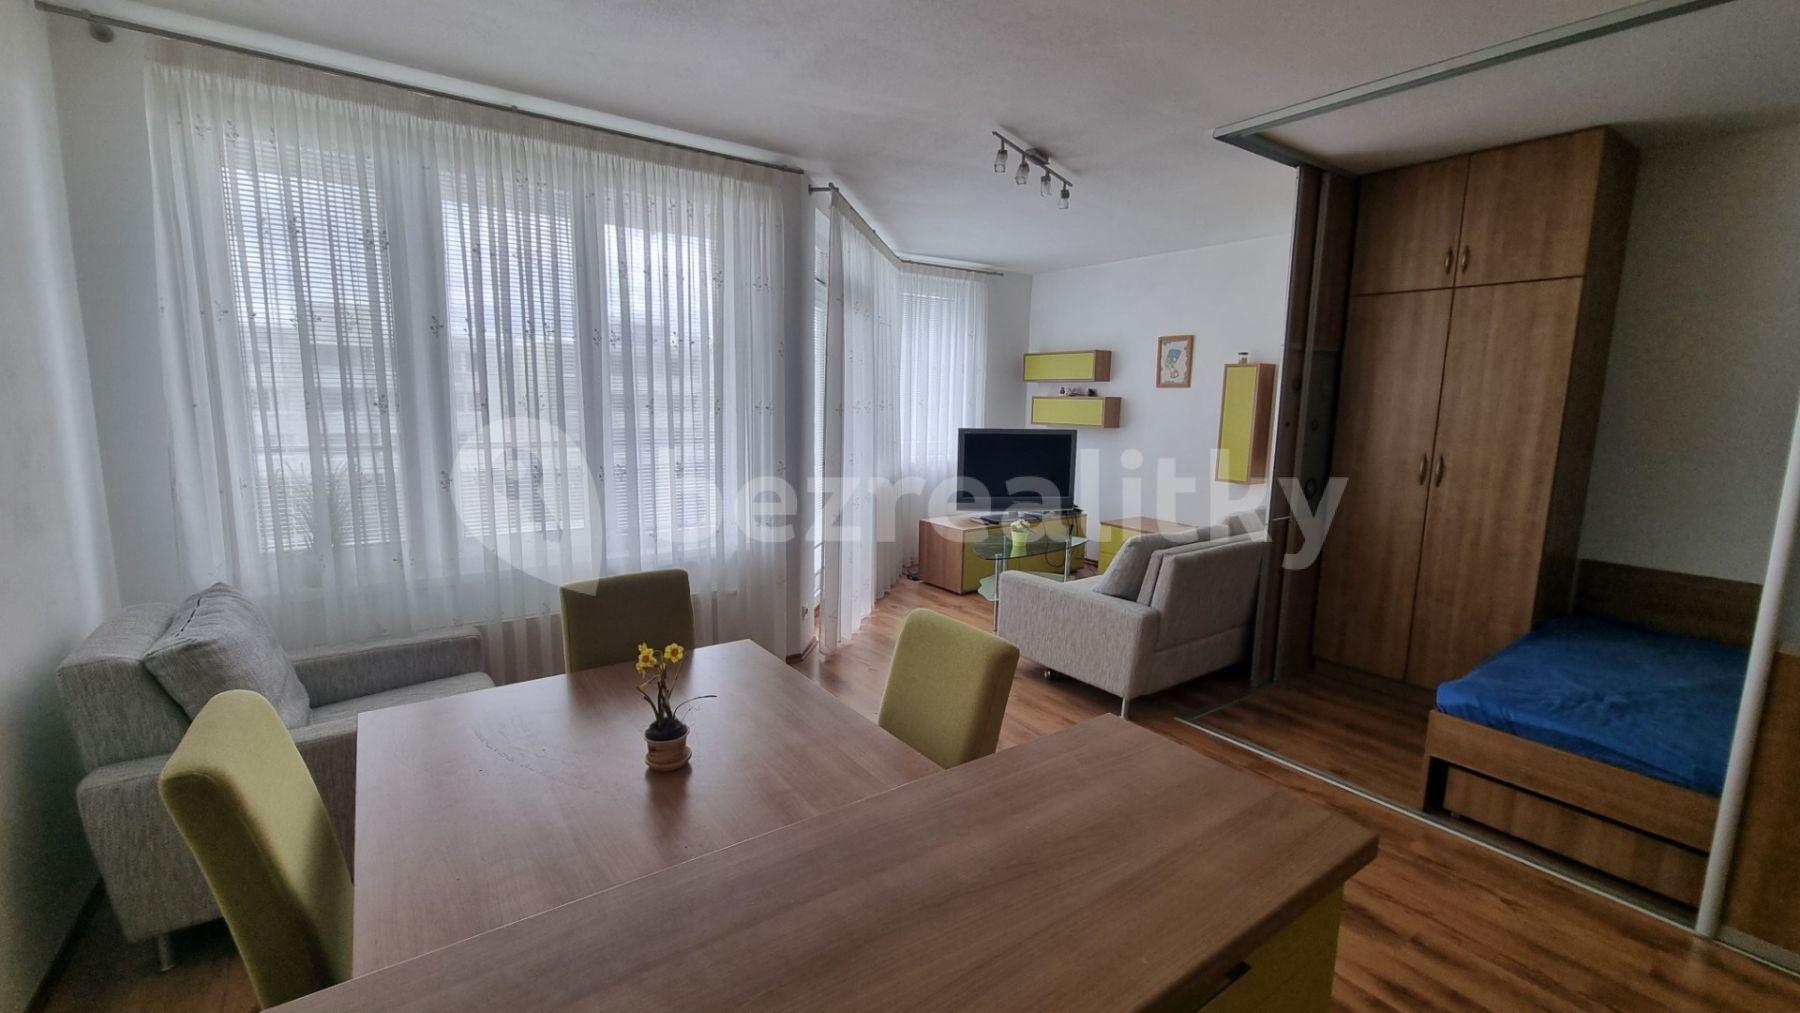 1 bedroom flat to rent, 42 m², Jégého, Ružinov, Bratislavský Region